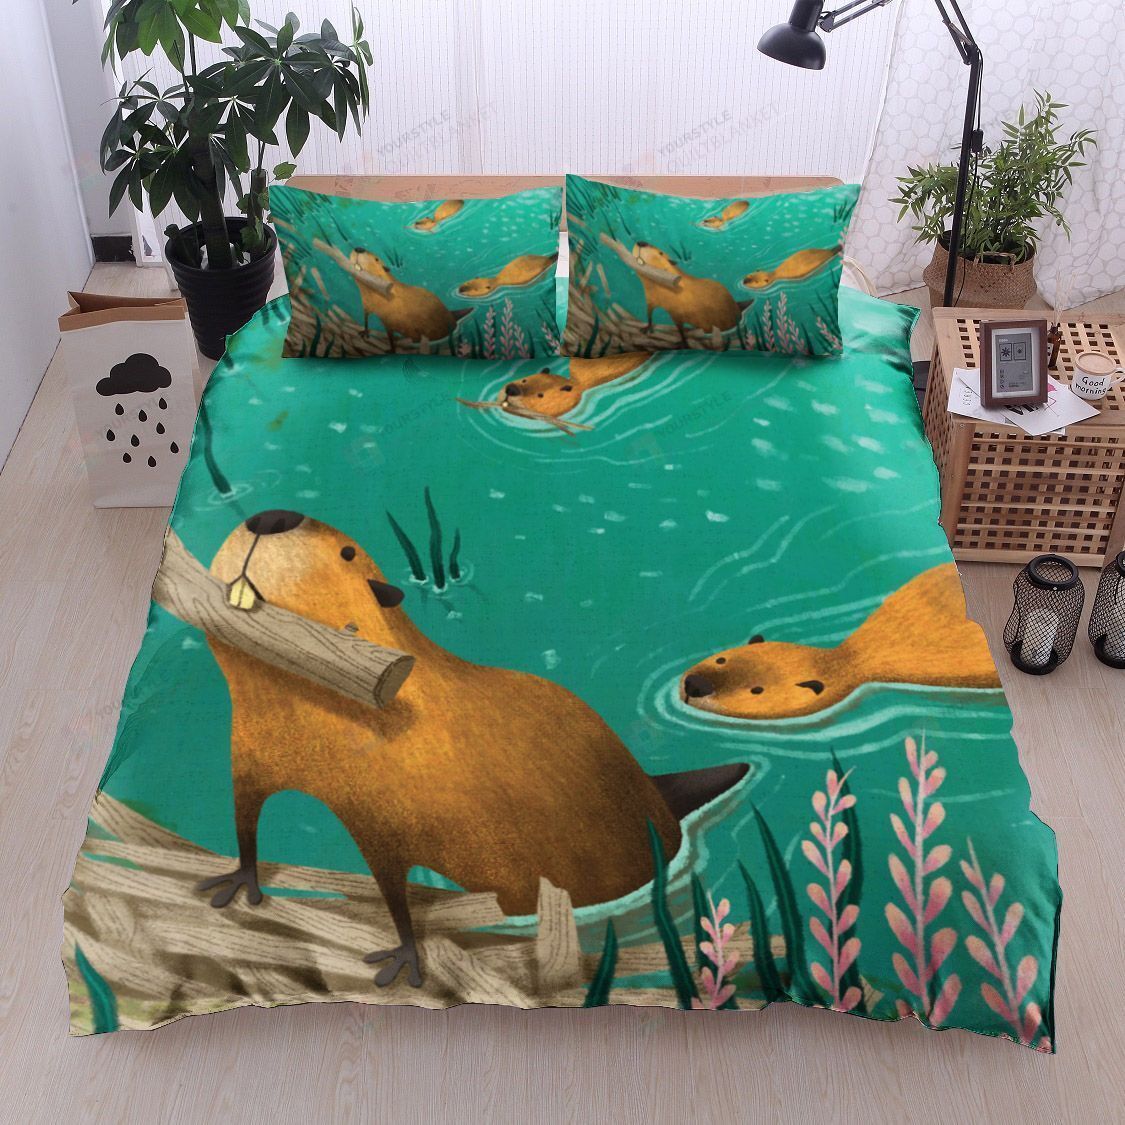 Otter Cotton Bed Sheets Spread Comforter Duvet Cover Bedding Sets